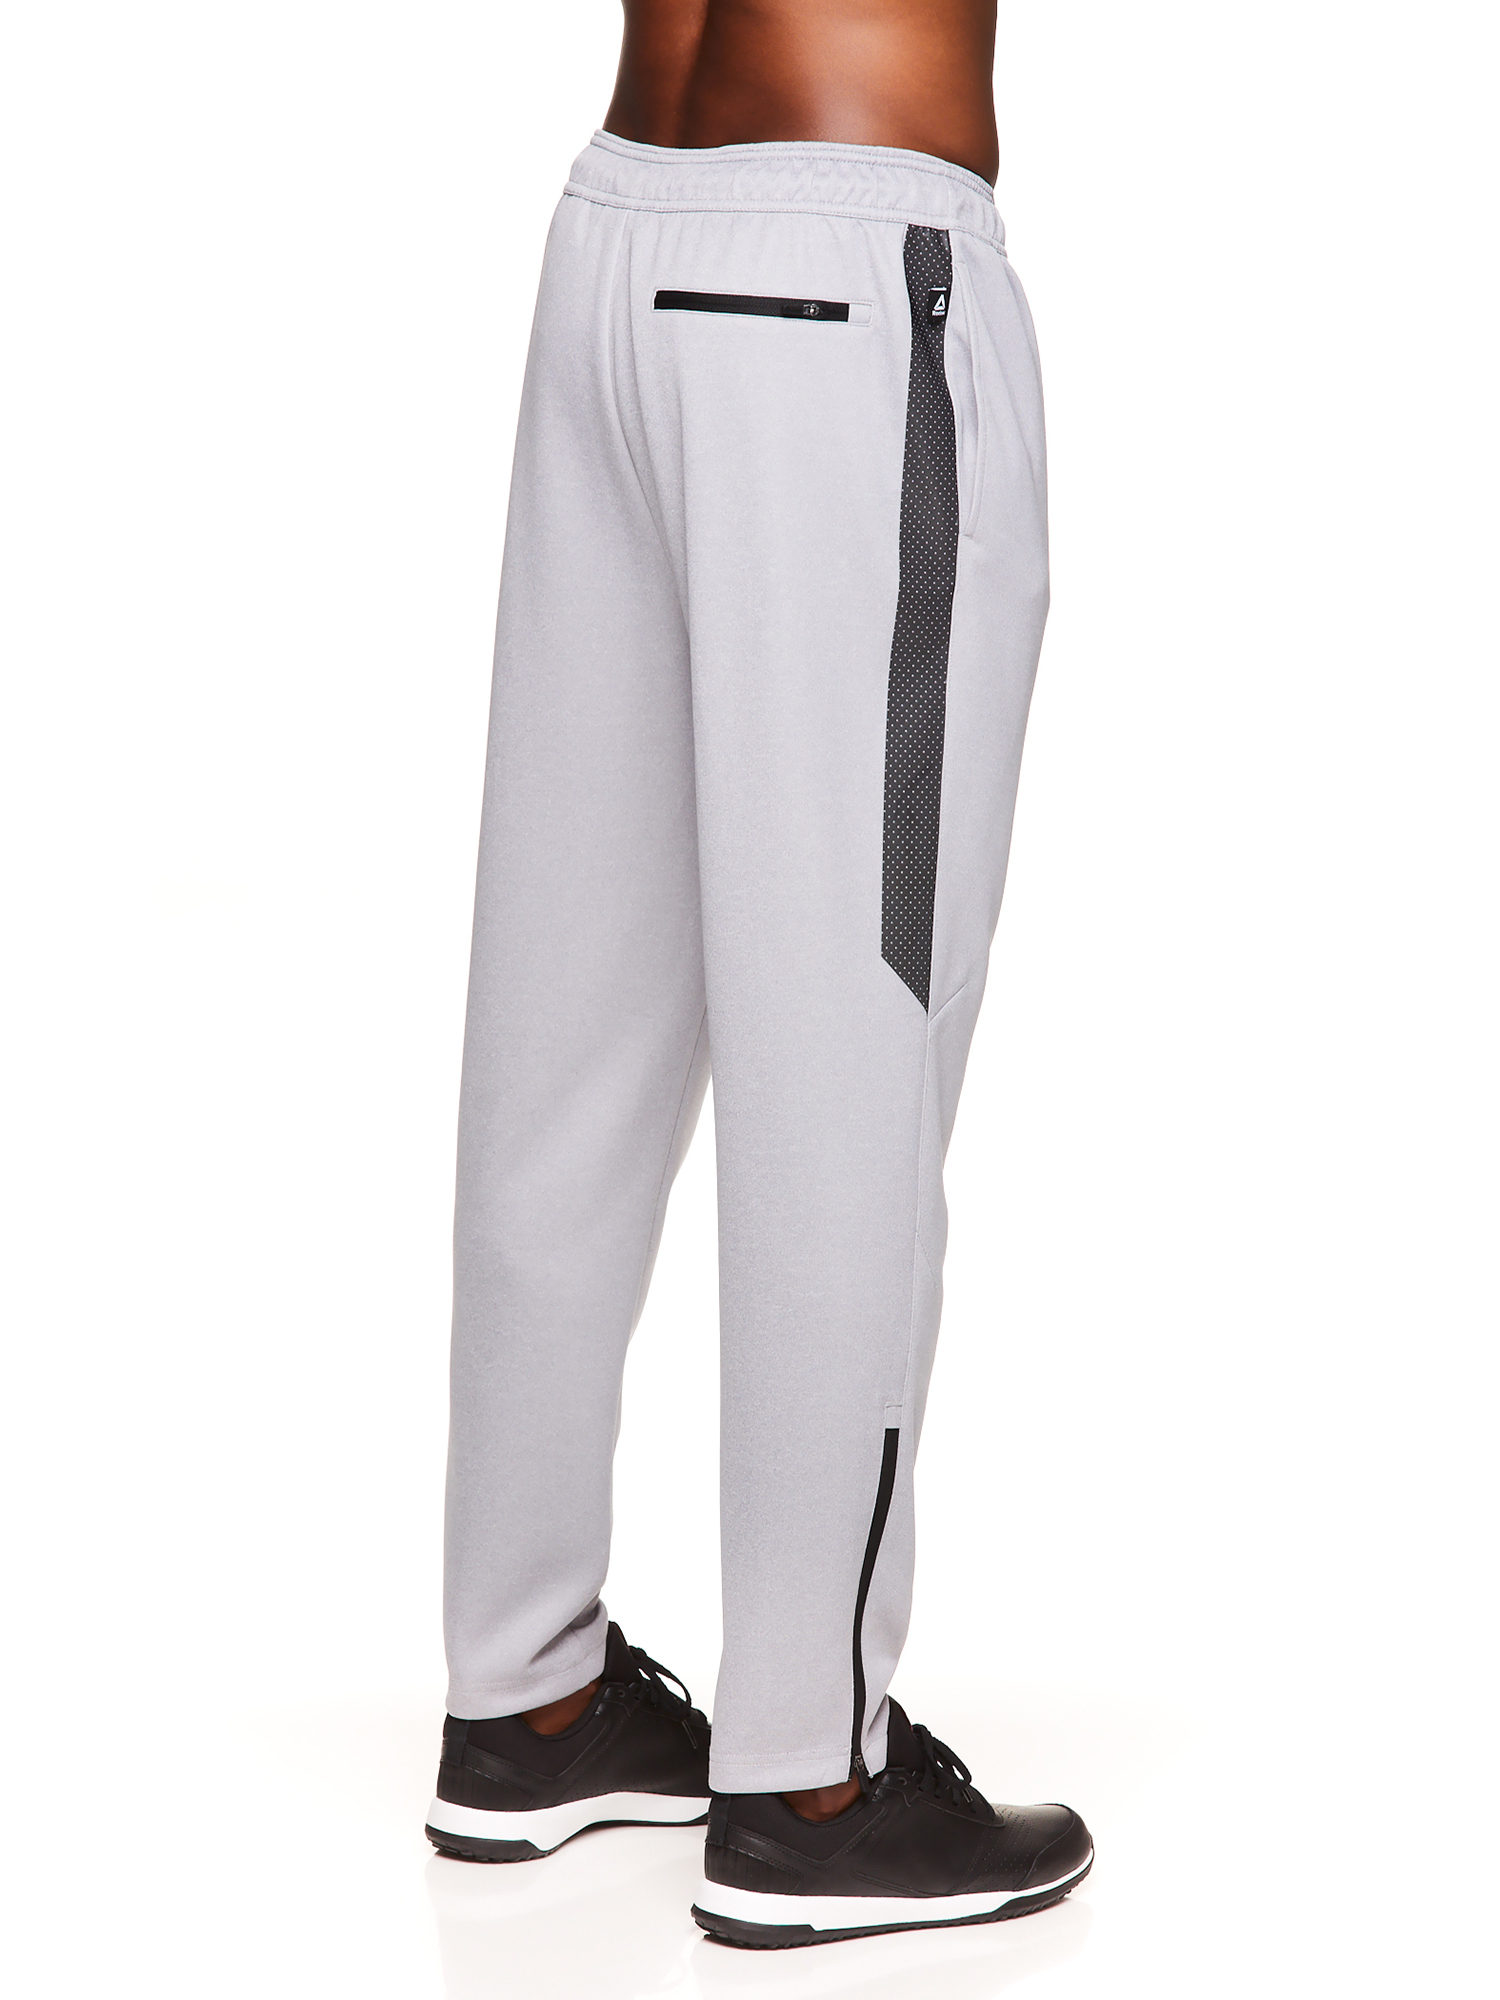 Reebok Men's and Big Men's Active Interlock Pants, up to Size 3XL - image 4 of 4